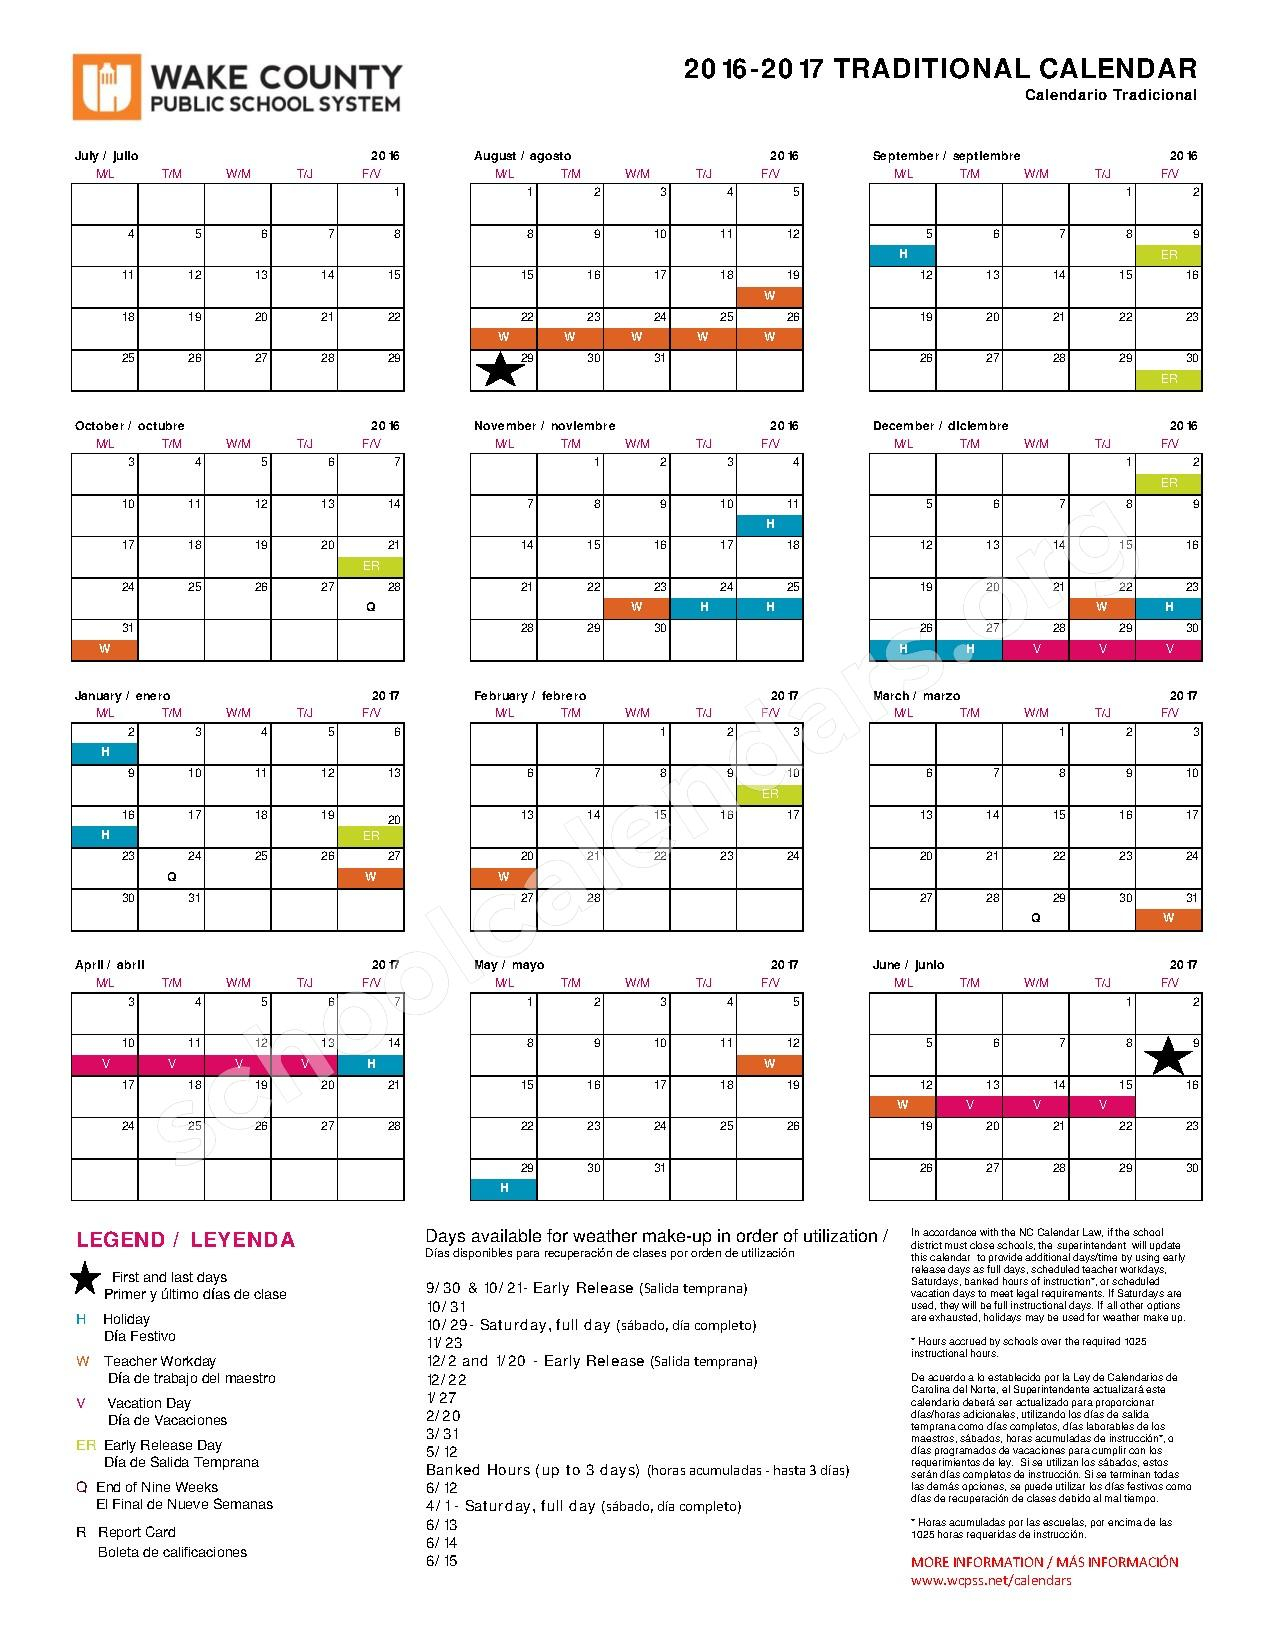 Traditional Wake County Calendar